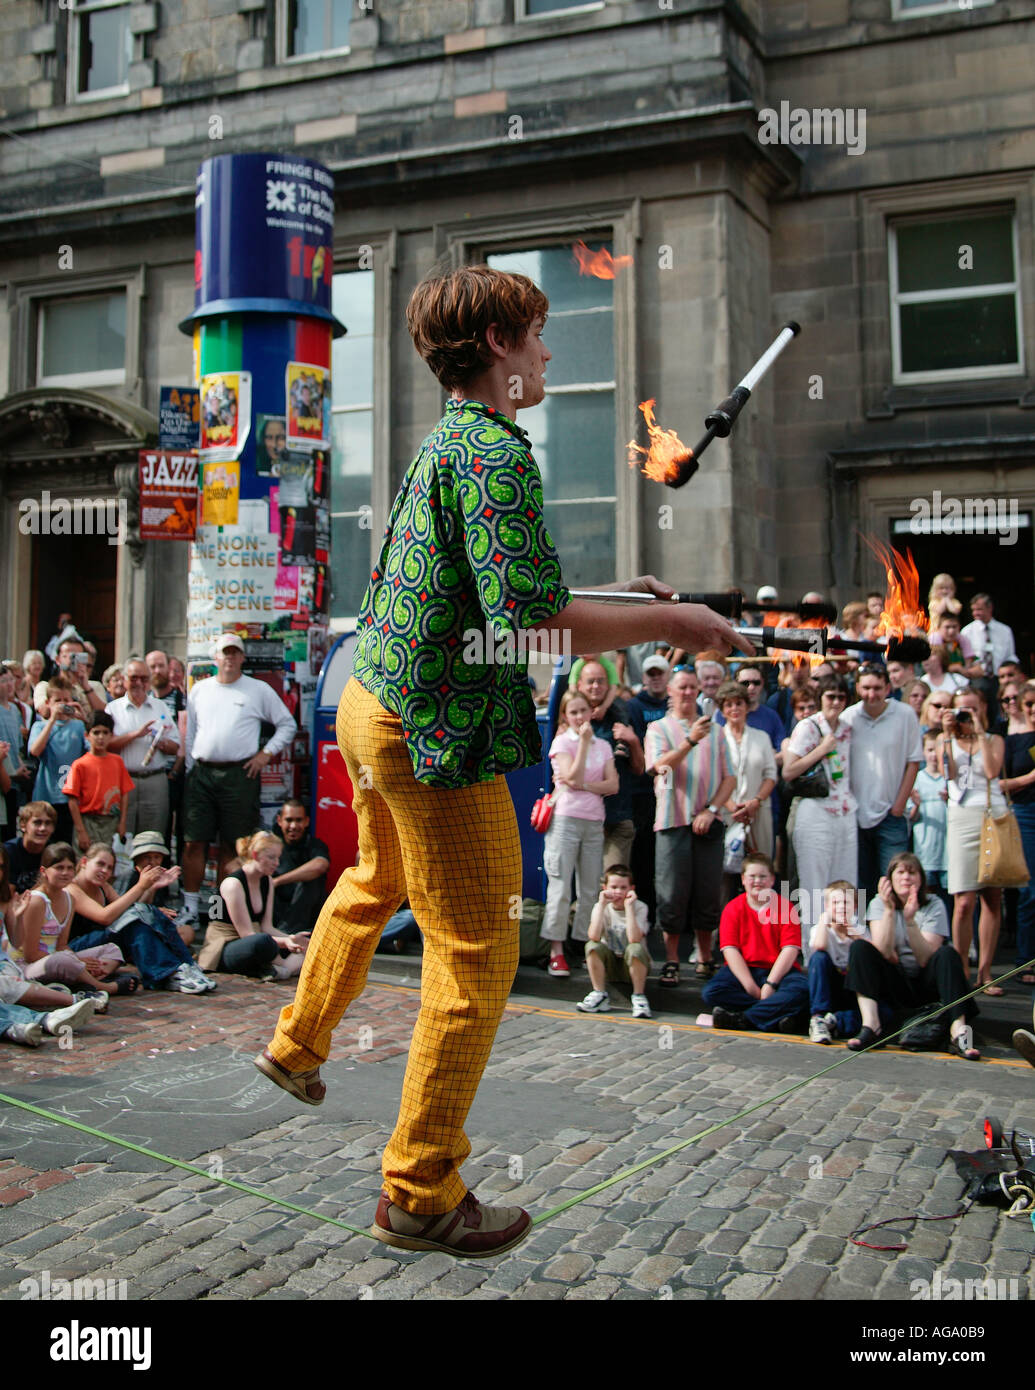 Fire juggler on tight rope at the Edinburgh Fringe Festival Scotland UK 2003 Stock Photo